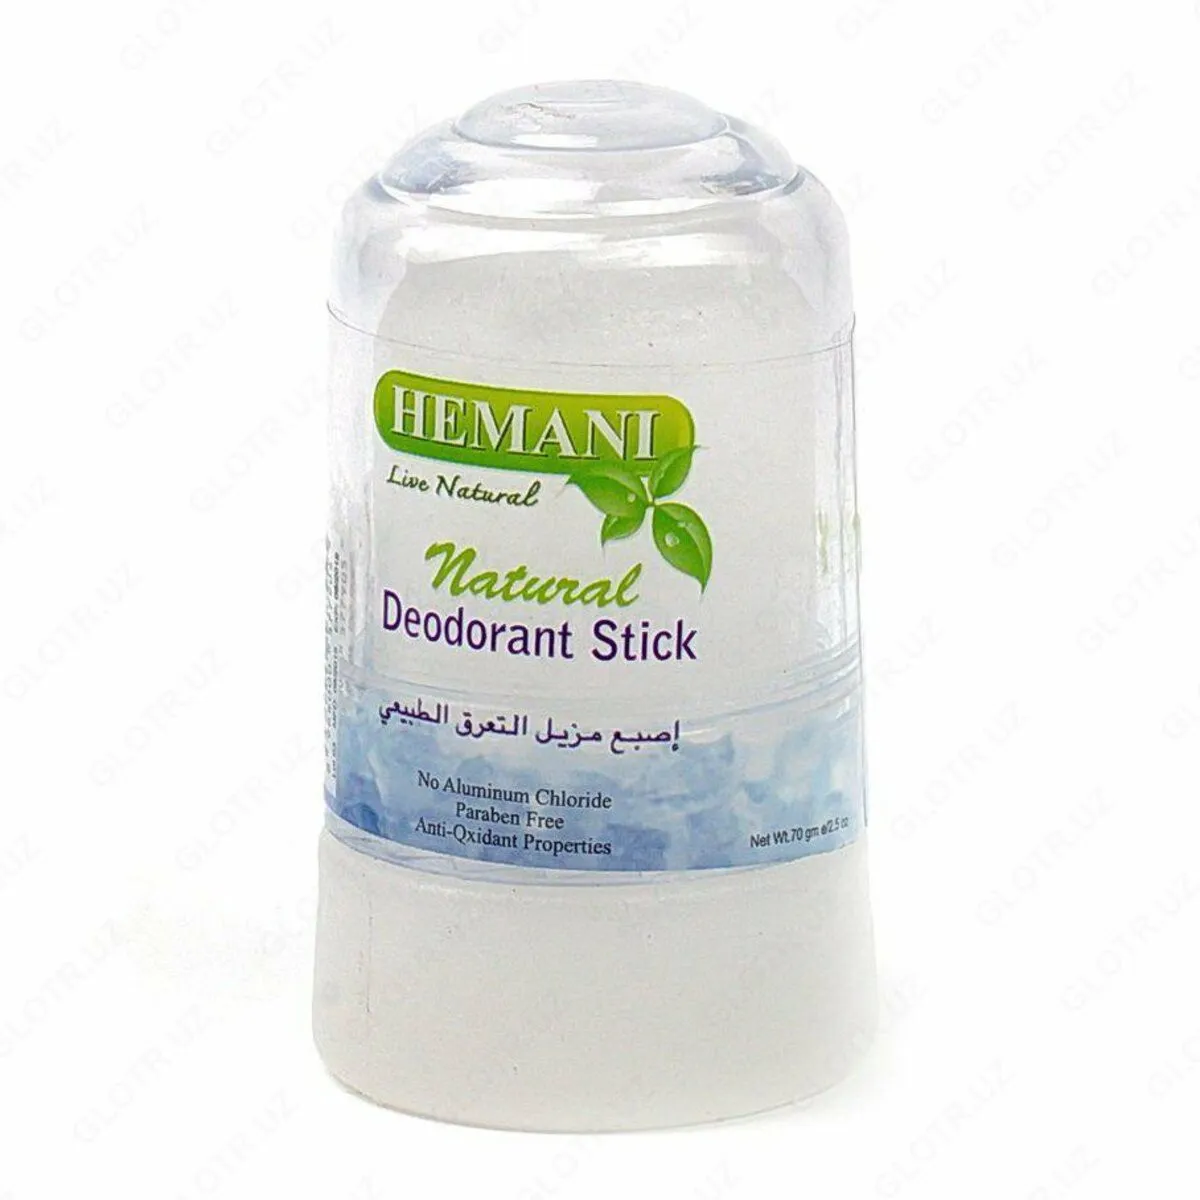 Hemani mineral dezodorantlari 100% tabiiy mineral tuzdir.#1